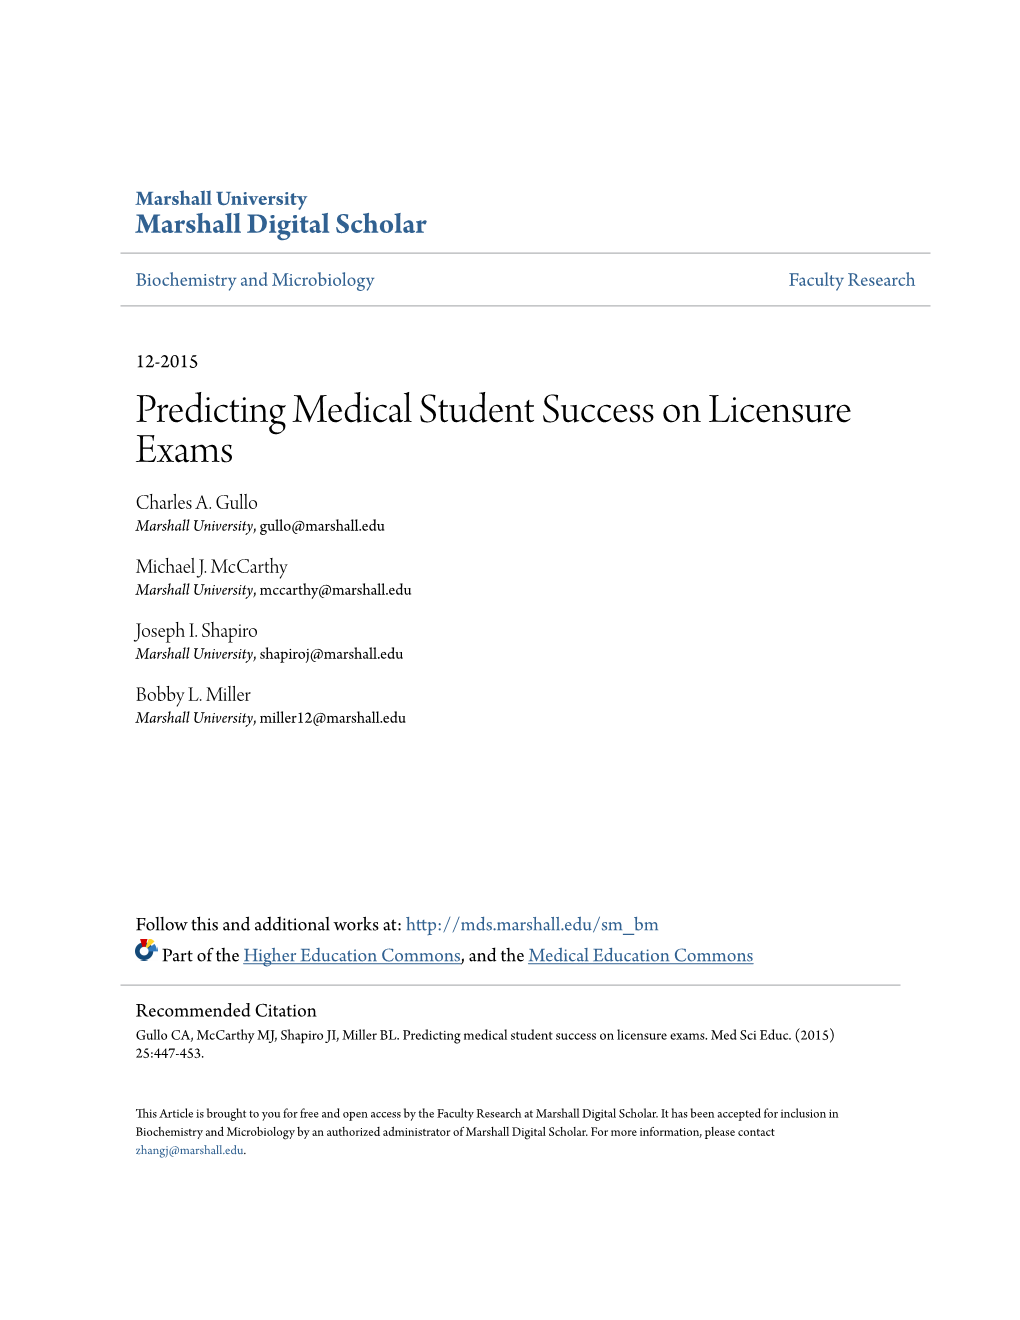 Predicting Medical Student Success on Licensure Exams Charles A